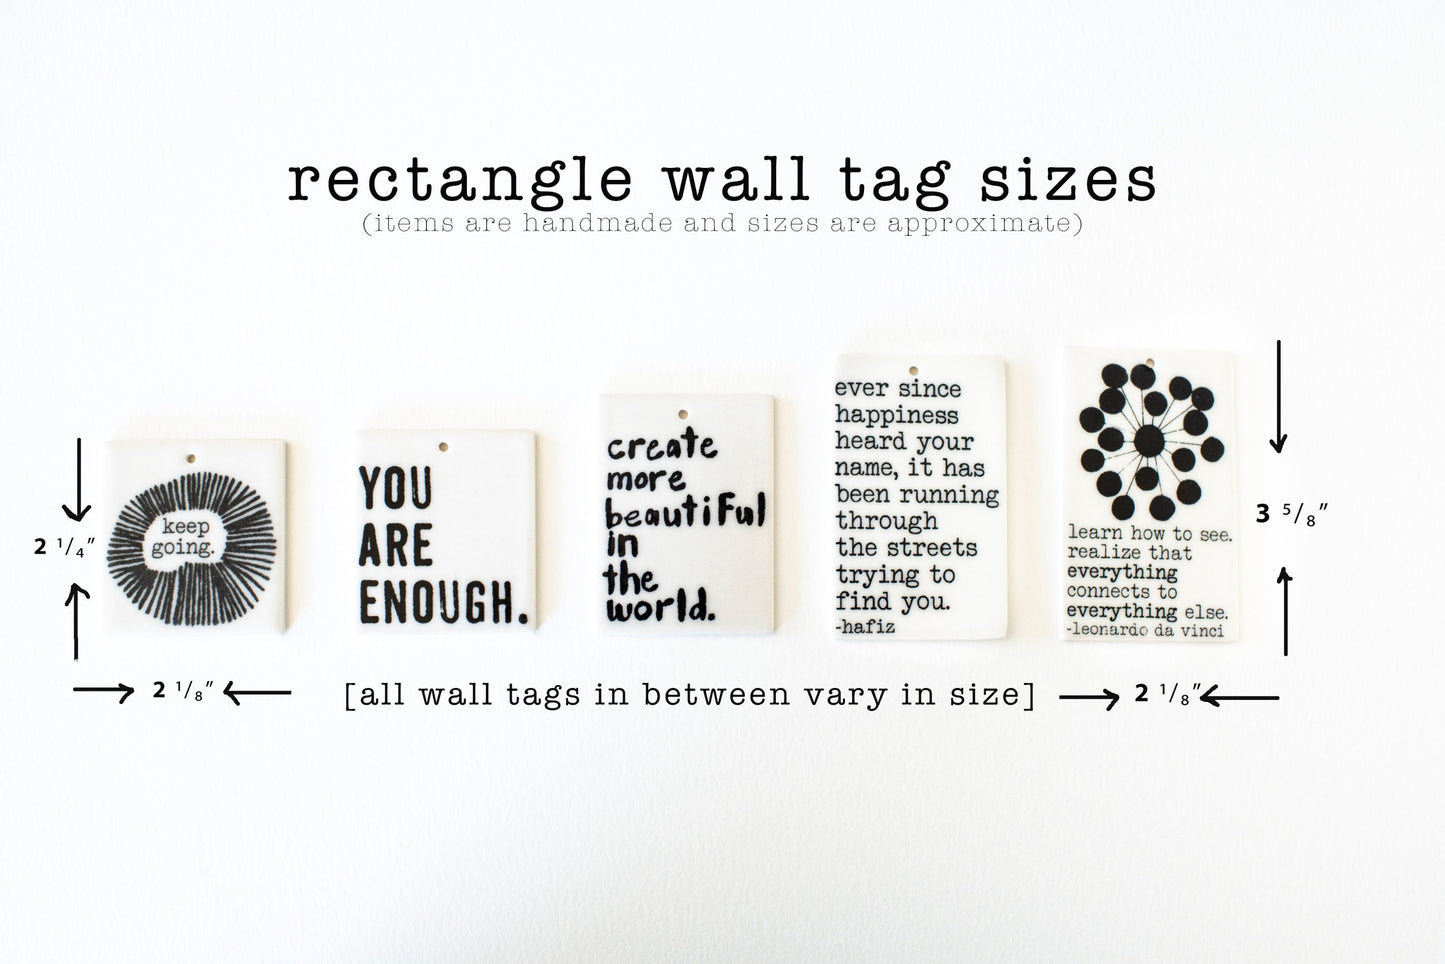 scott stabile quote ceramic wall tag